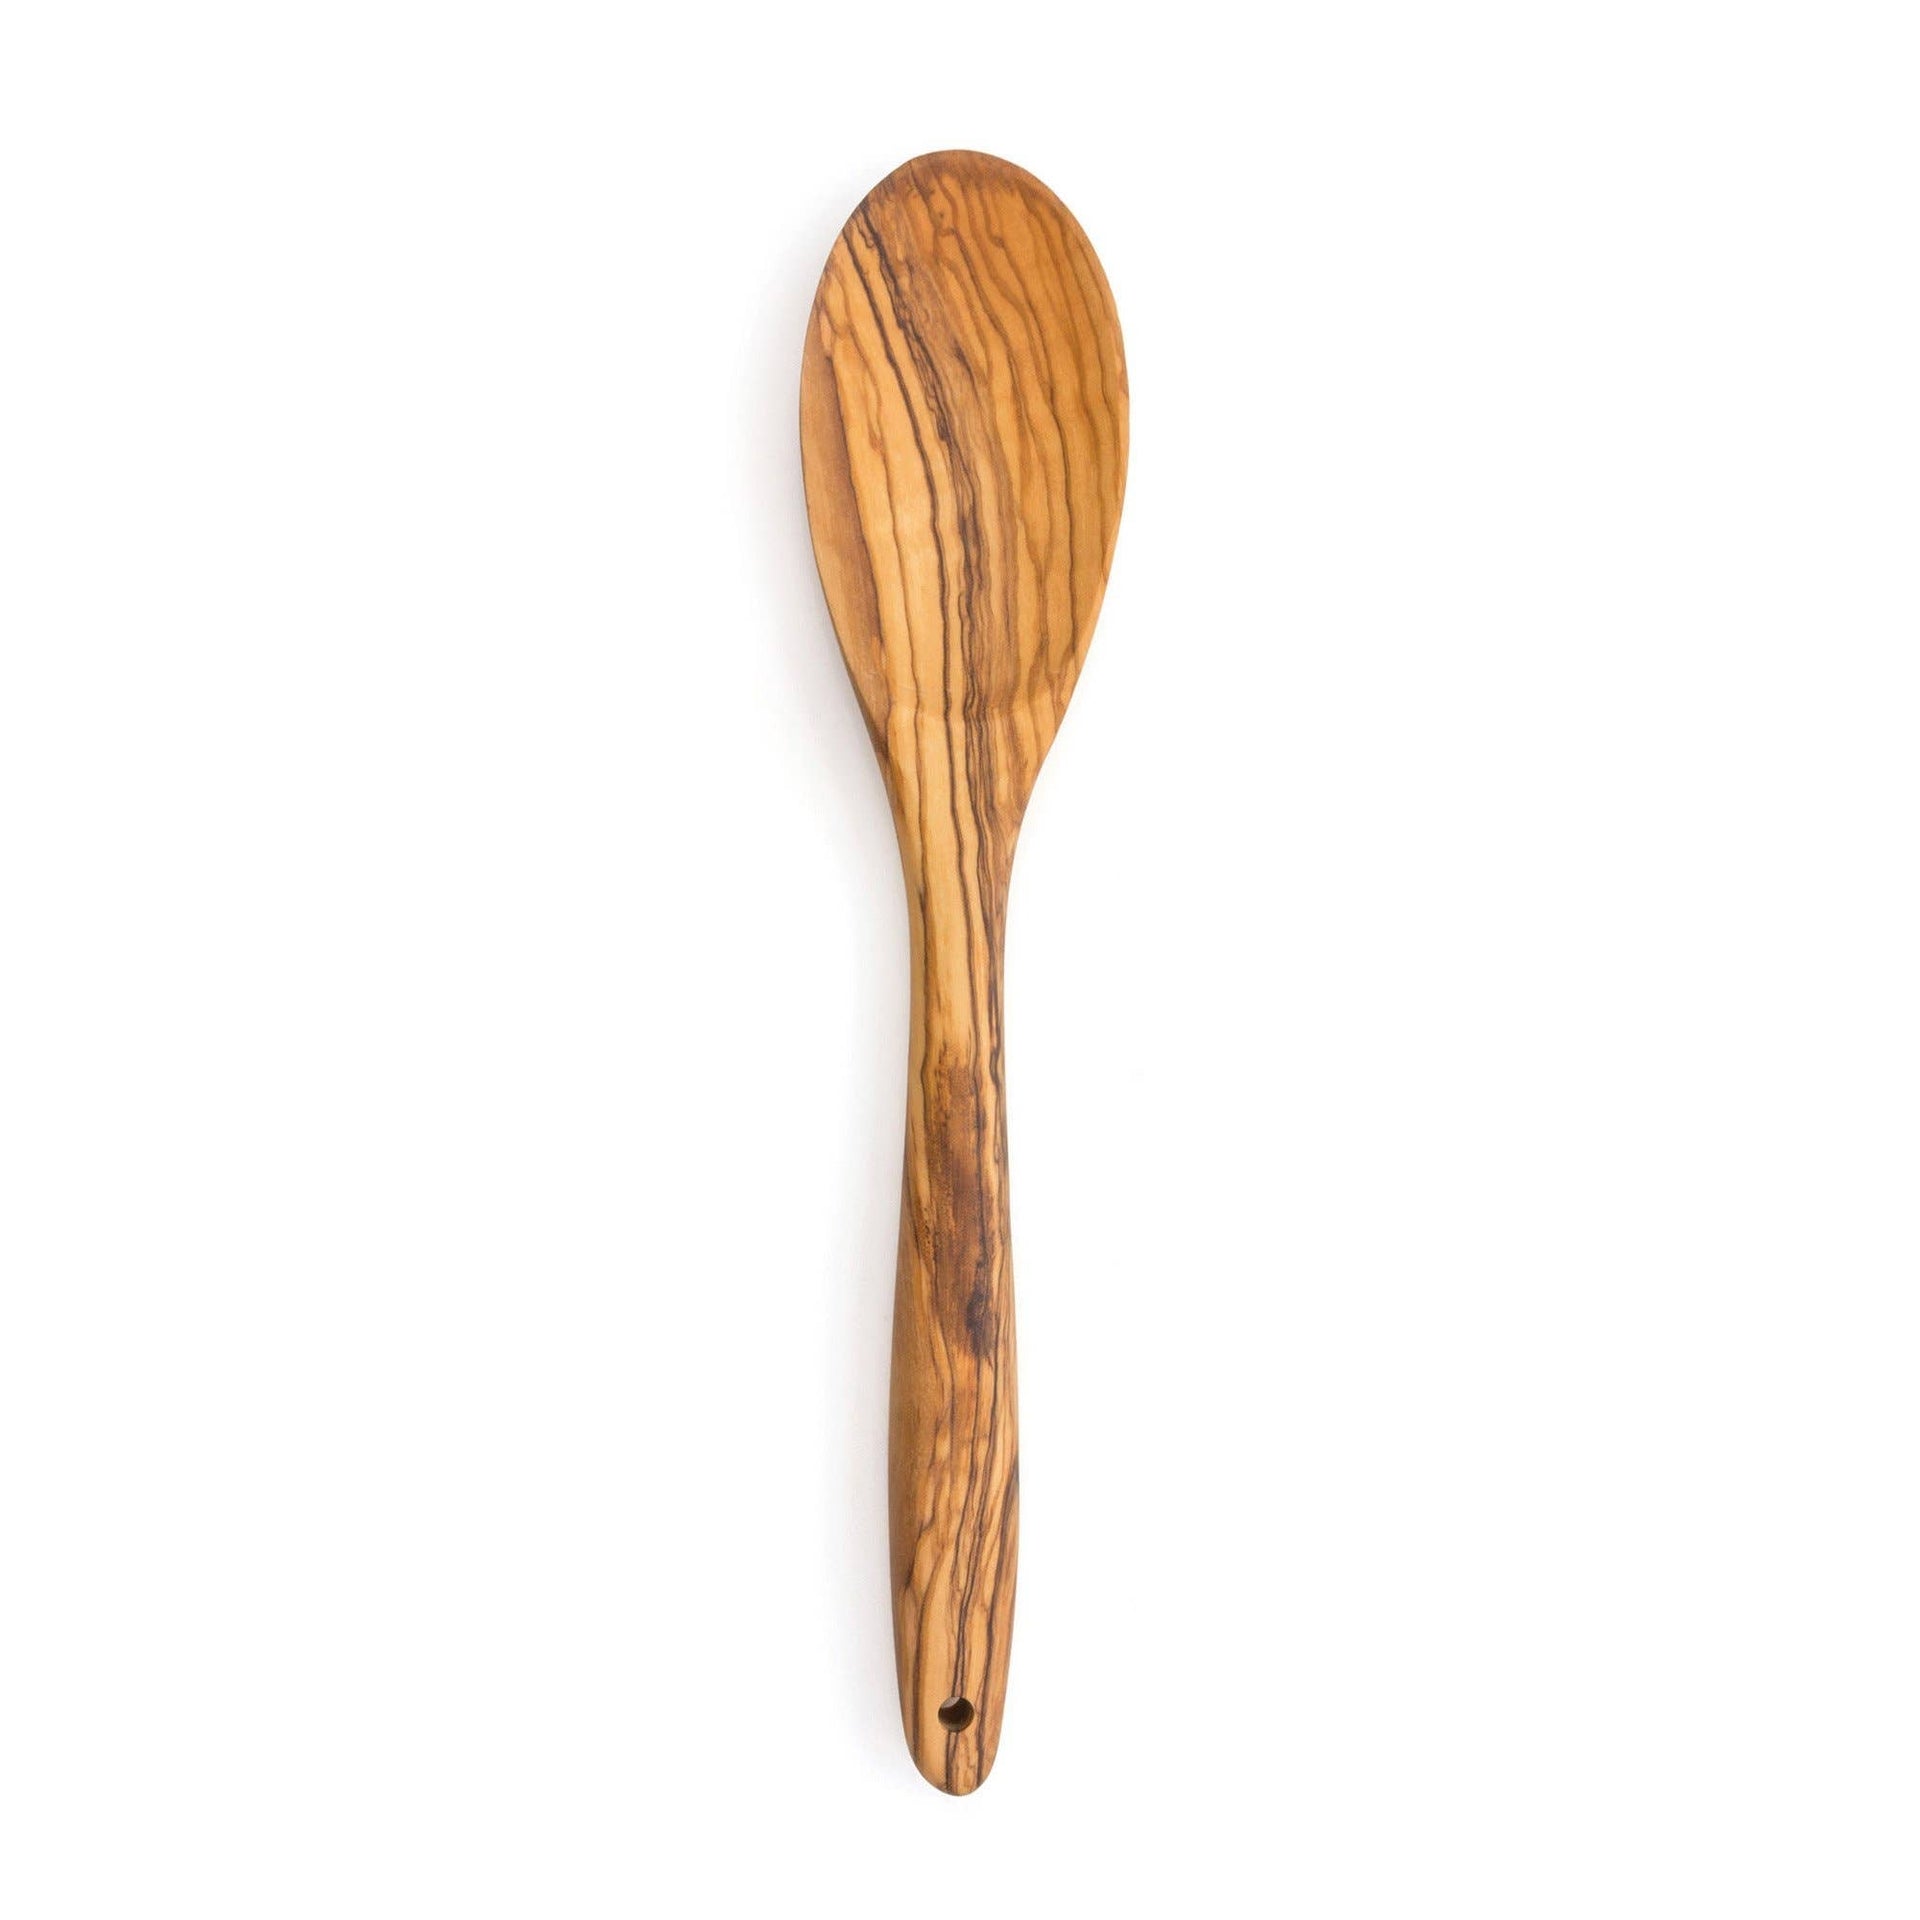 Olive Wood Spoon or Spatula